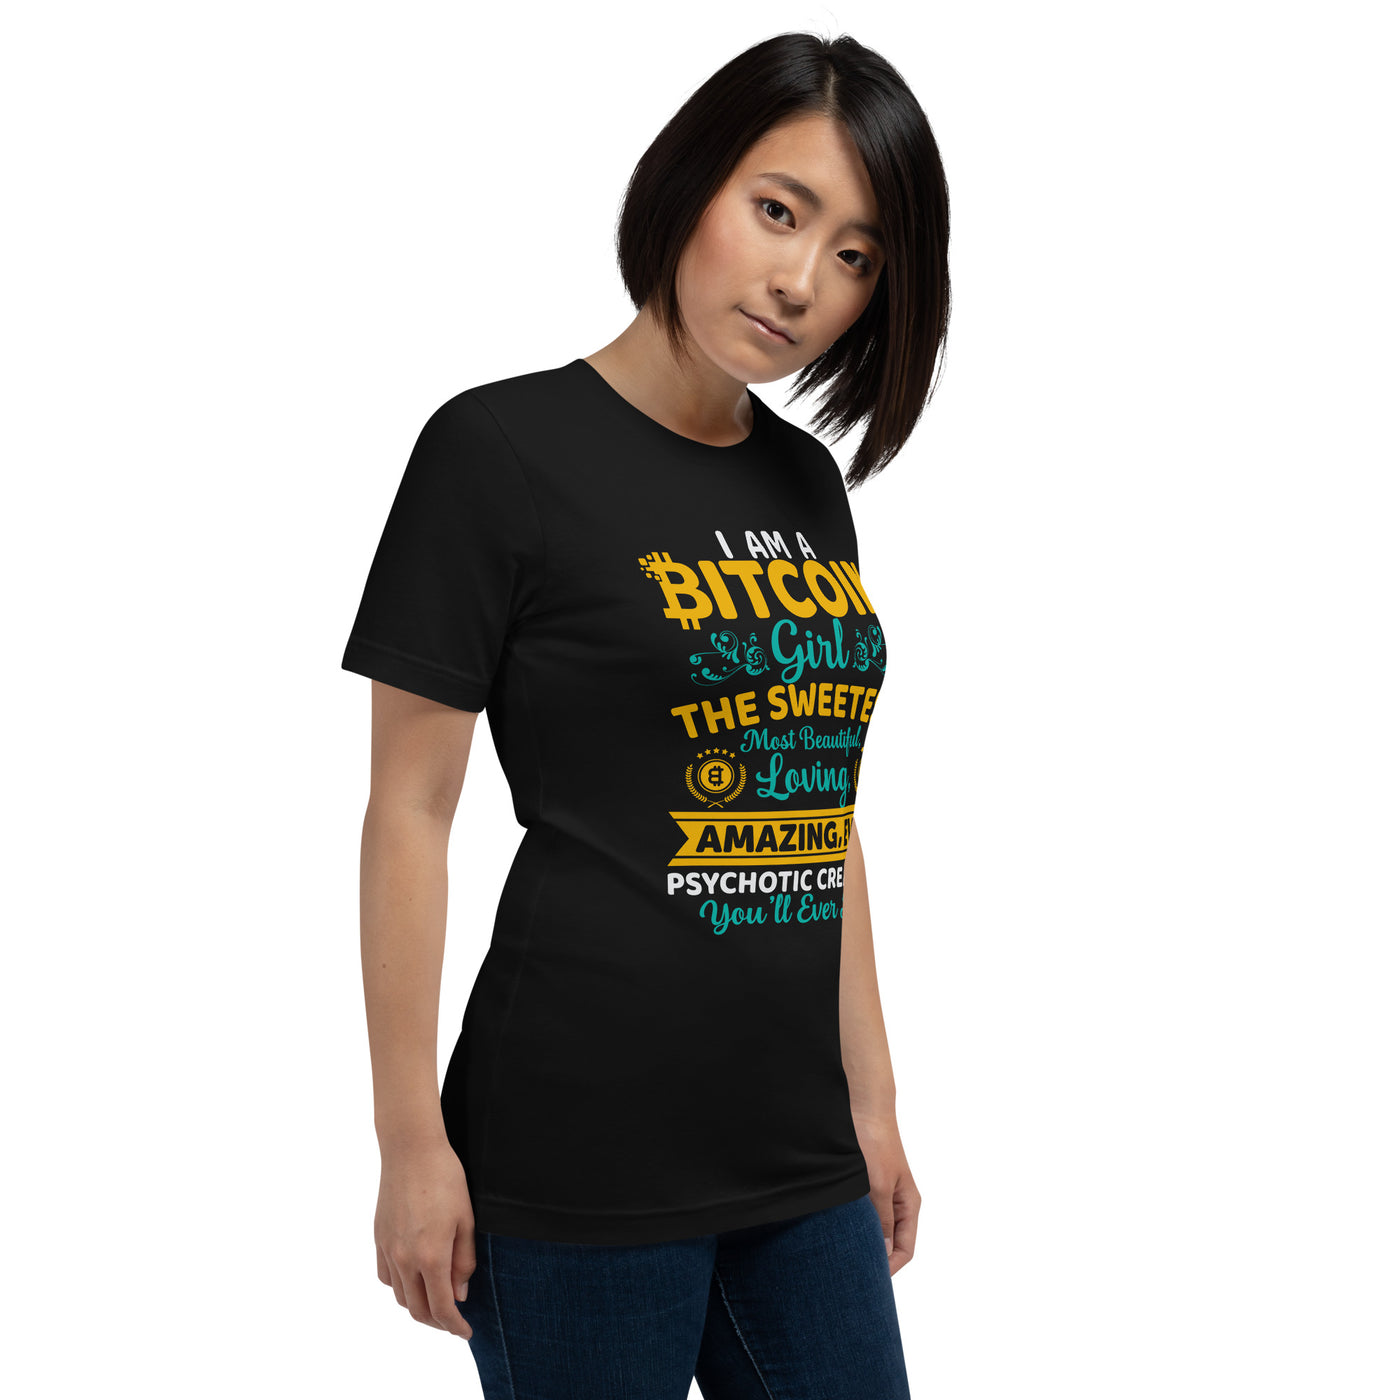 I am a Bitcoin Girl, the sweetest - Unisex t-shirt